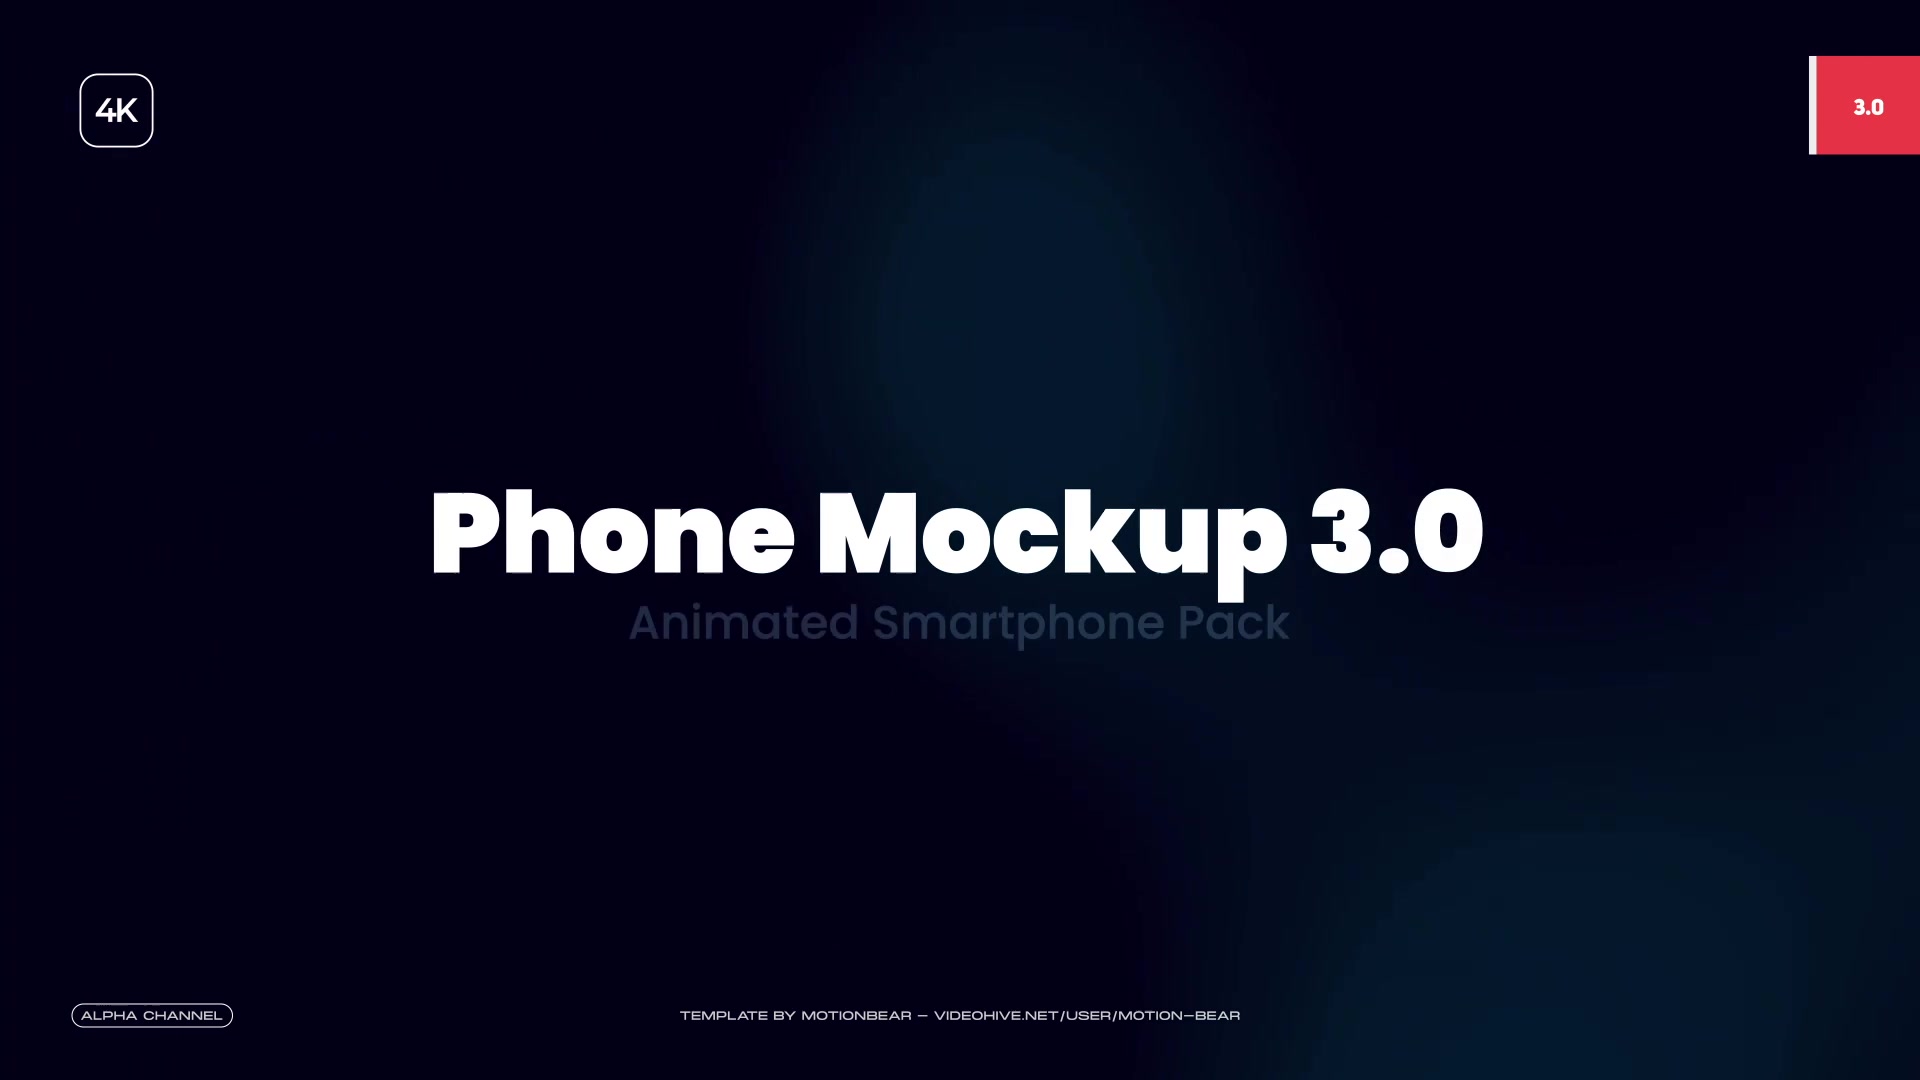 Phone Mockup Package 03 Premiere Pro Videohive 38700332 Premiere Pro Image 4